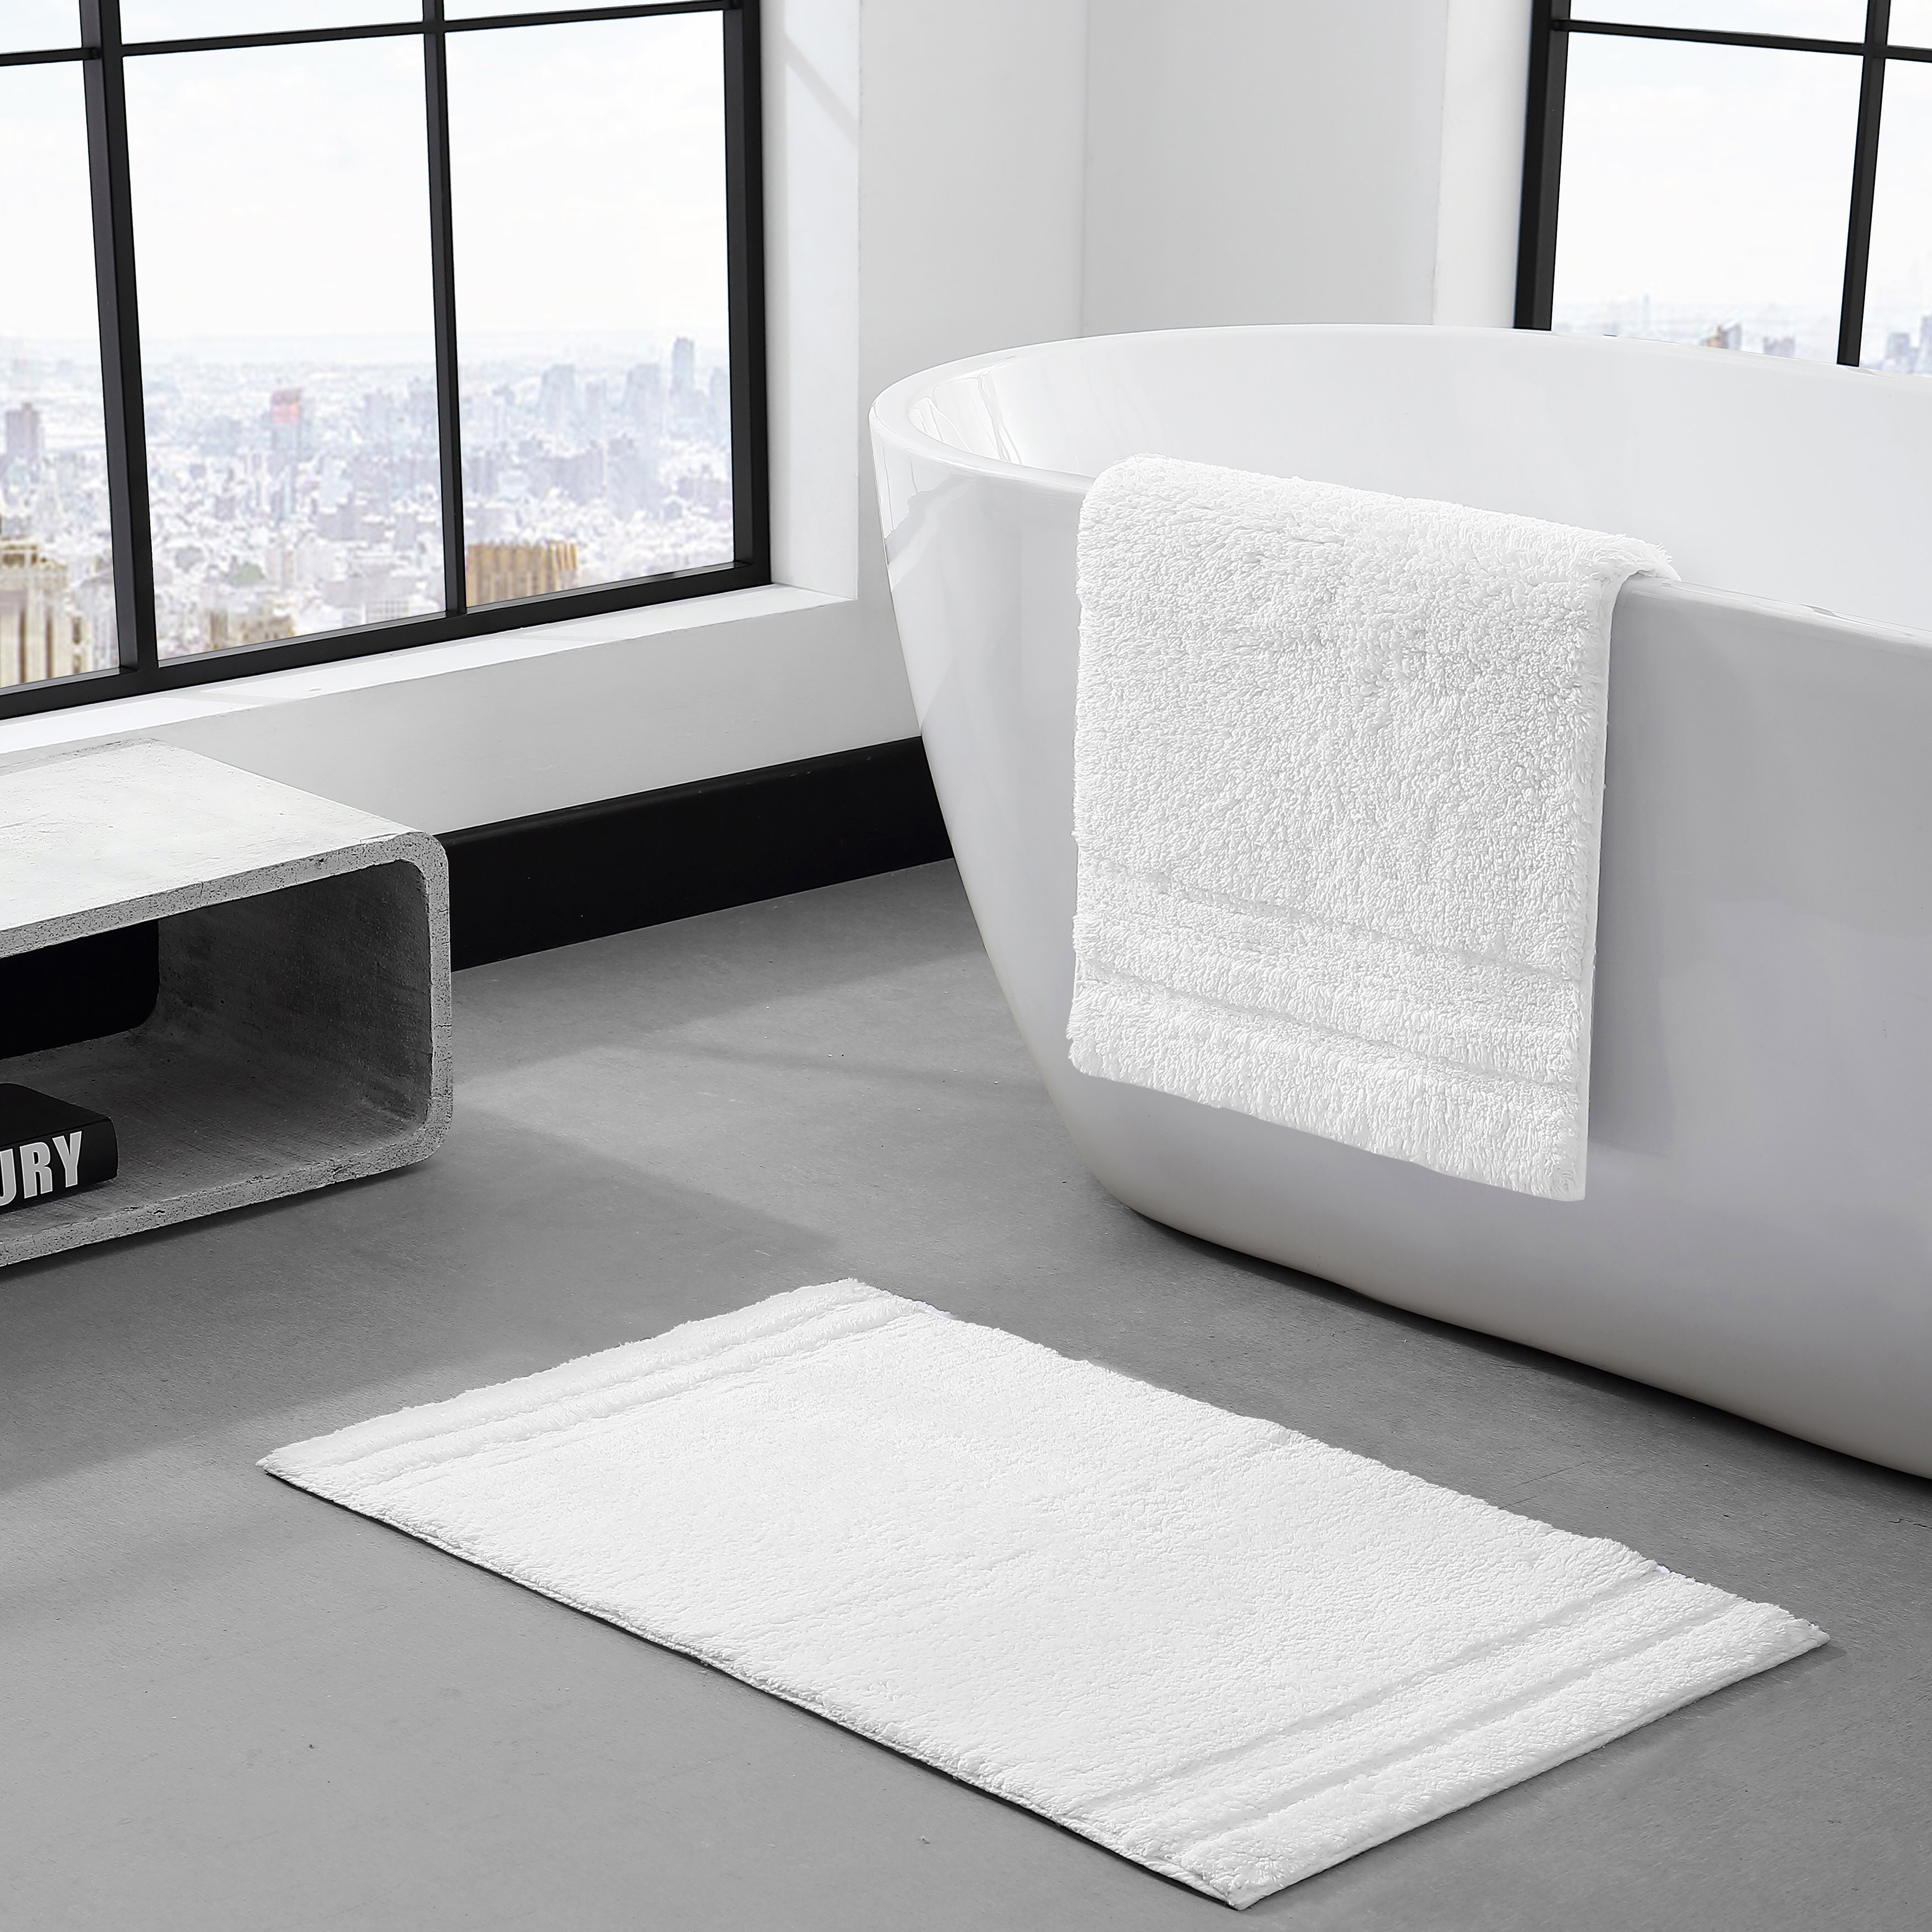 Vera Wang - Bath Towels Set, Luxury Cotton Bathroom Set, Plush & Super  Absorbent (Modern Lux White, 3 Piece)